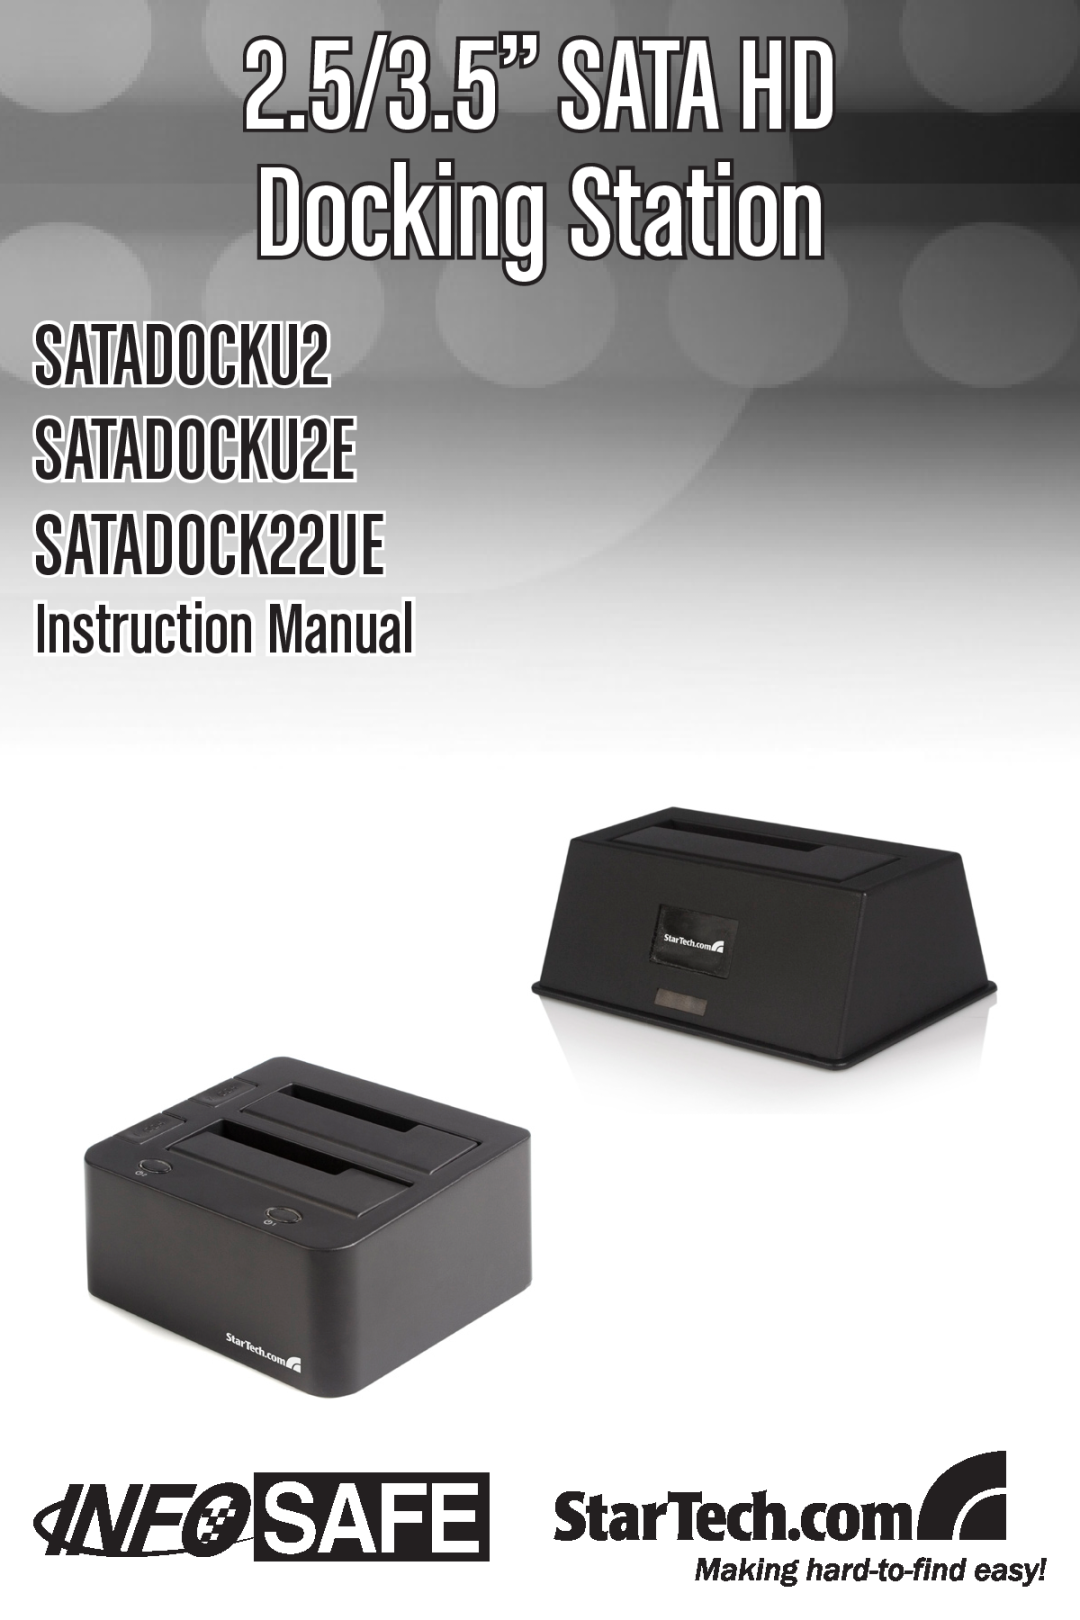 StarTech.com instruction manual SATADOCKU2 SATADOCKU2E SATADOCK22UE, Instruction Manual 